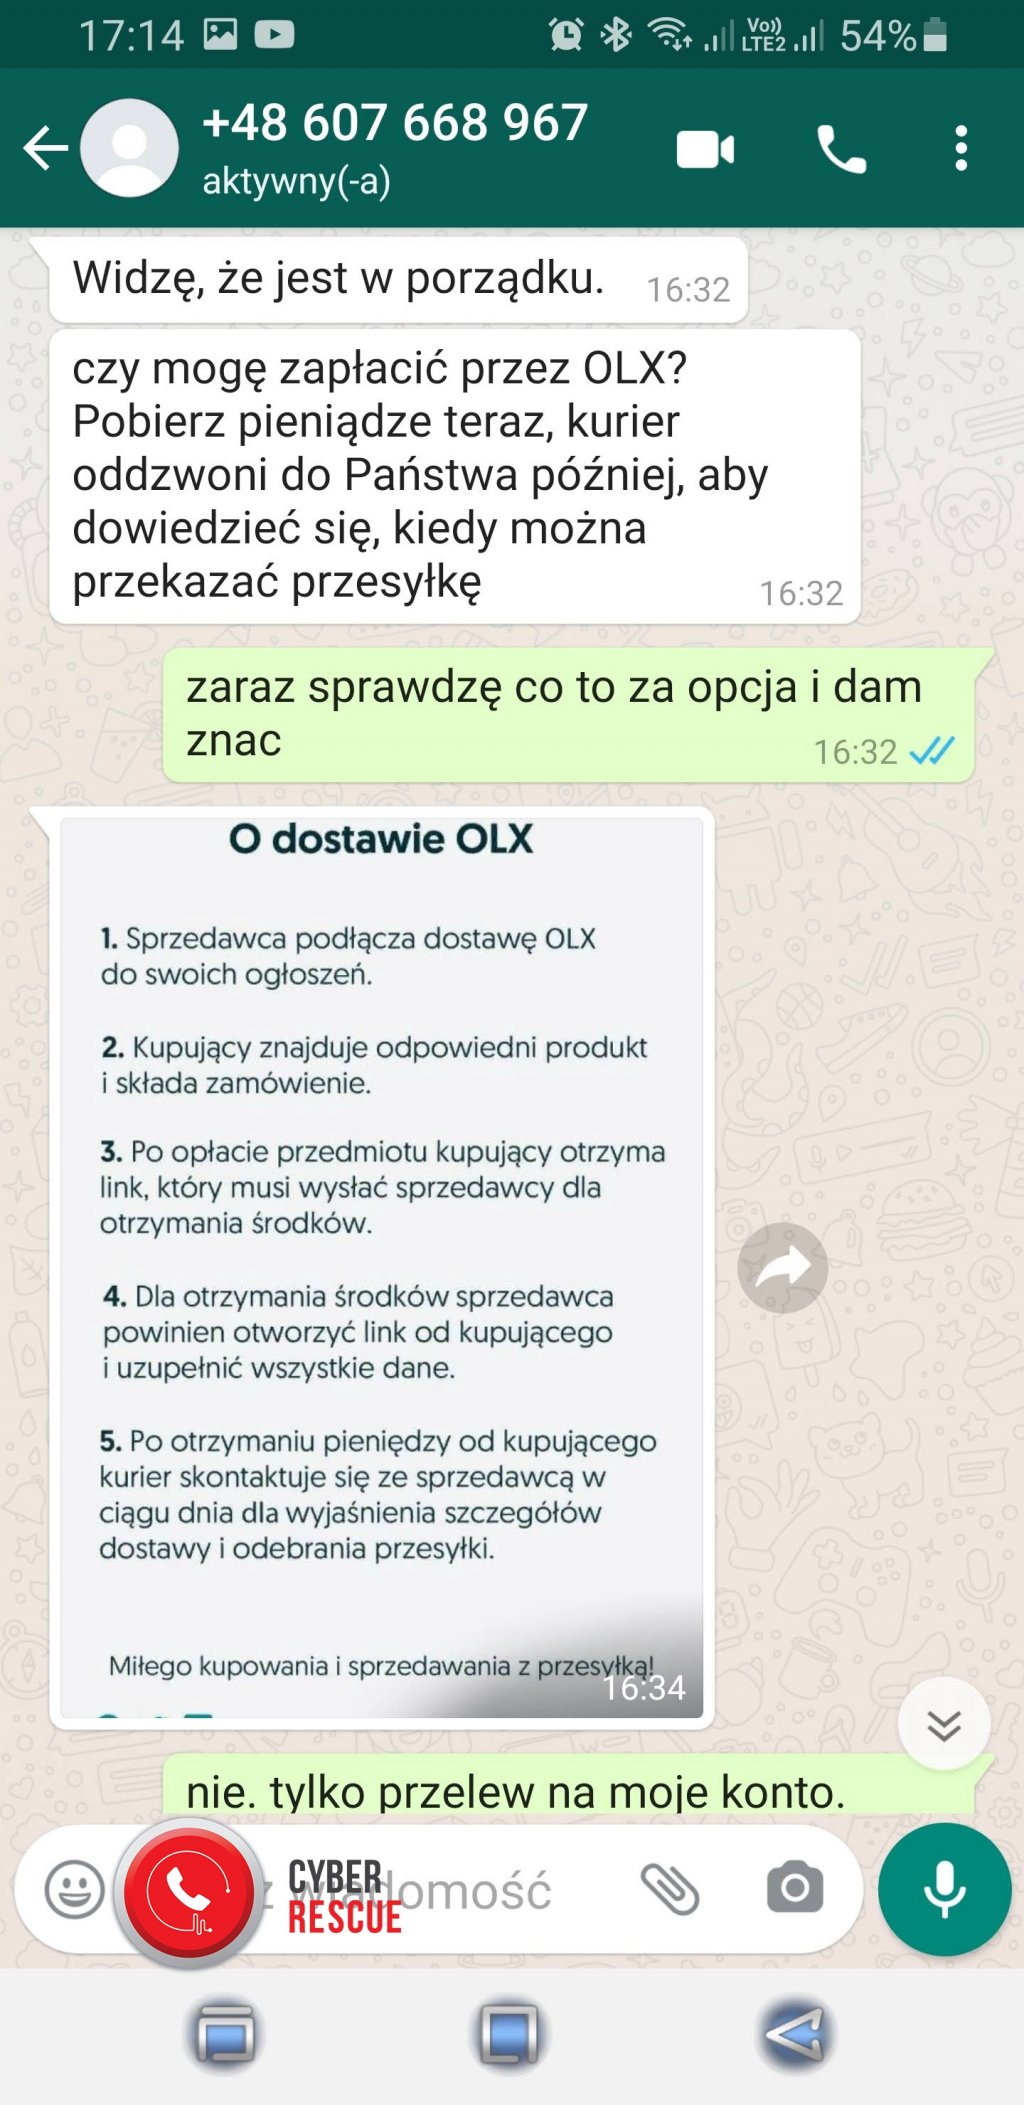 WhatsApp OLX oszustwo